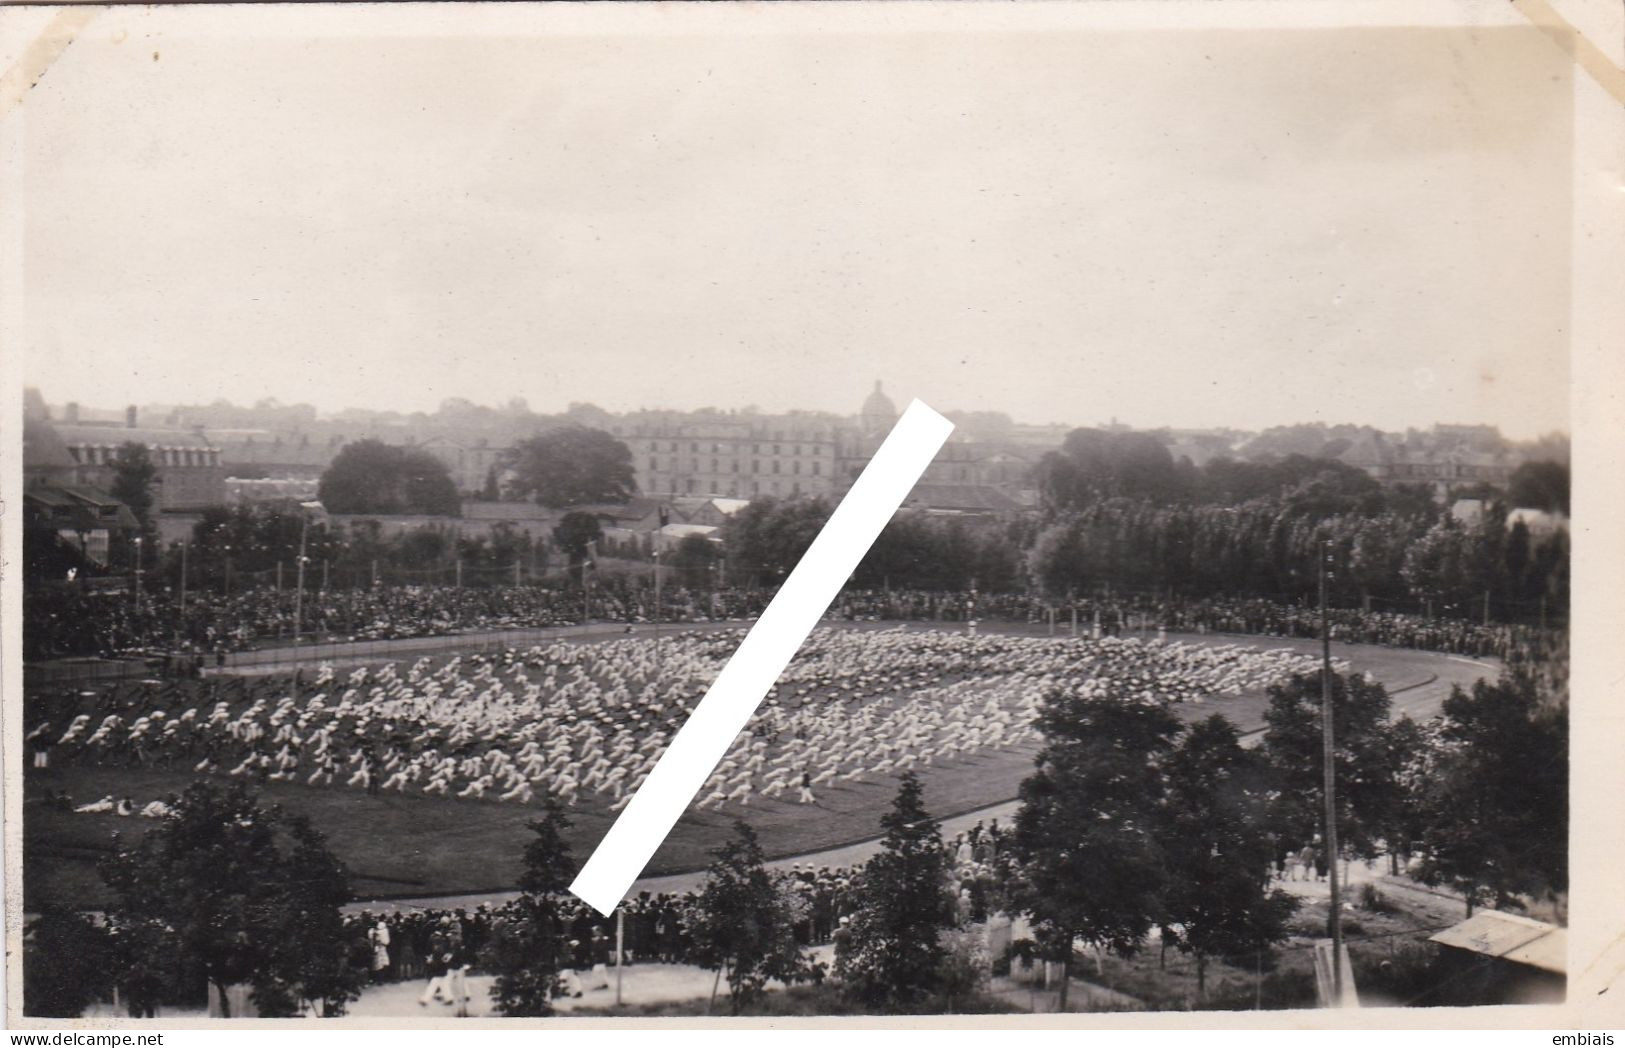 14 CAEN 1928 - Fête Fédérale De Gymnastique- Epreuves De Gymnastique Au Stade. Carte Photo R.Delassallle - Caen